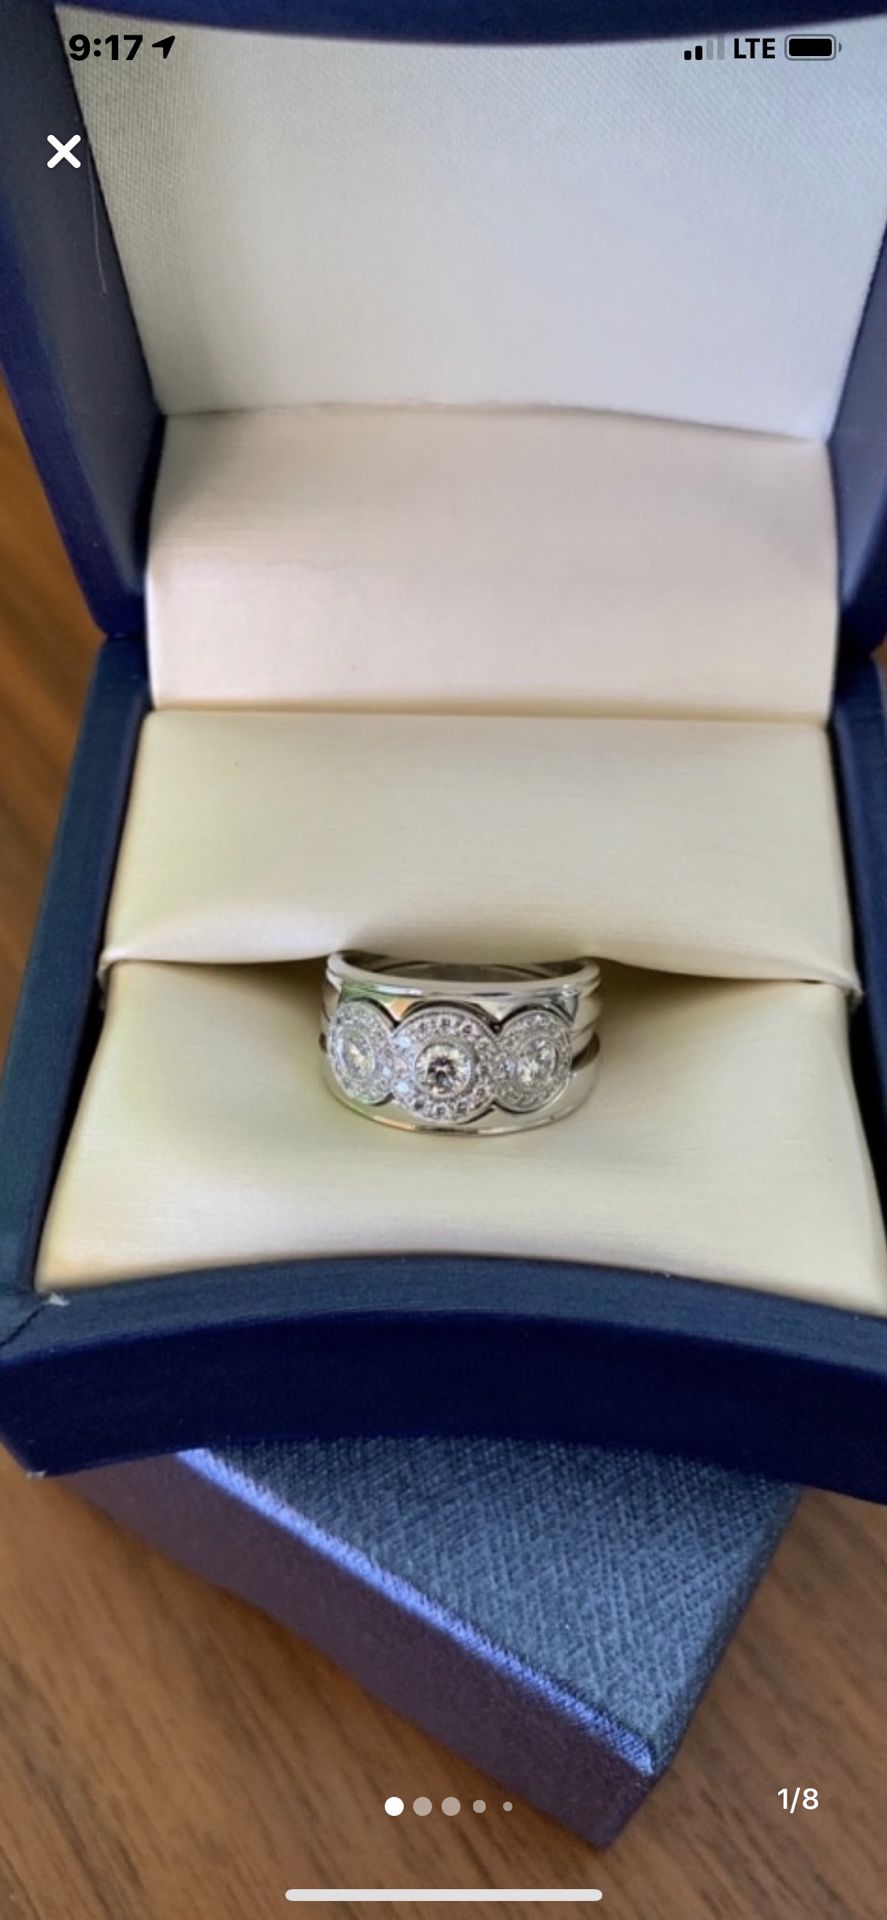 Platinum Tiffany & Co. Diamond Wedding Engagement Ring size 6.5 with custom bands